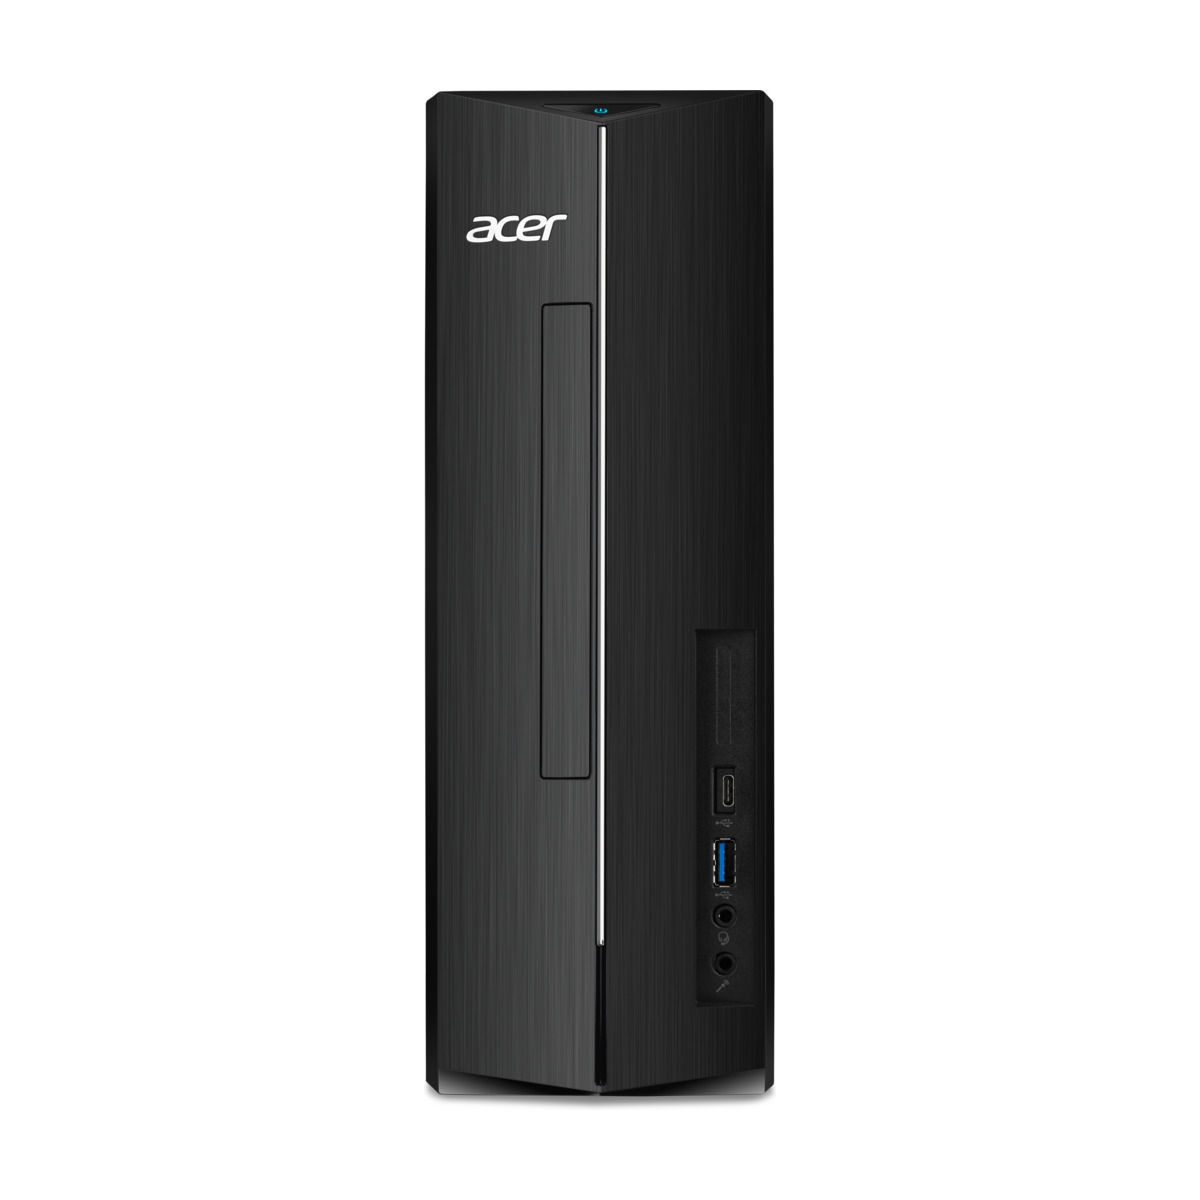 Acer Aspire Xc-1780 I5 stationær PC